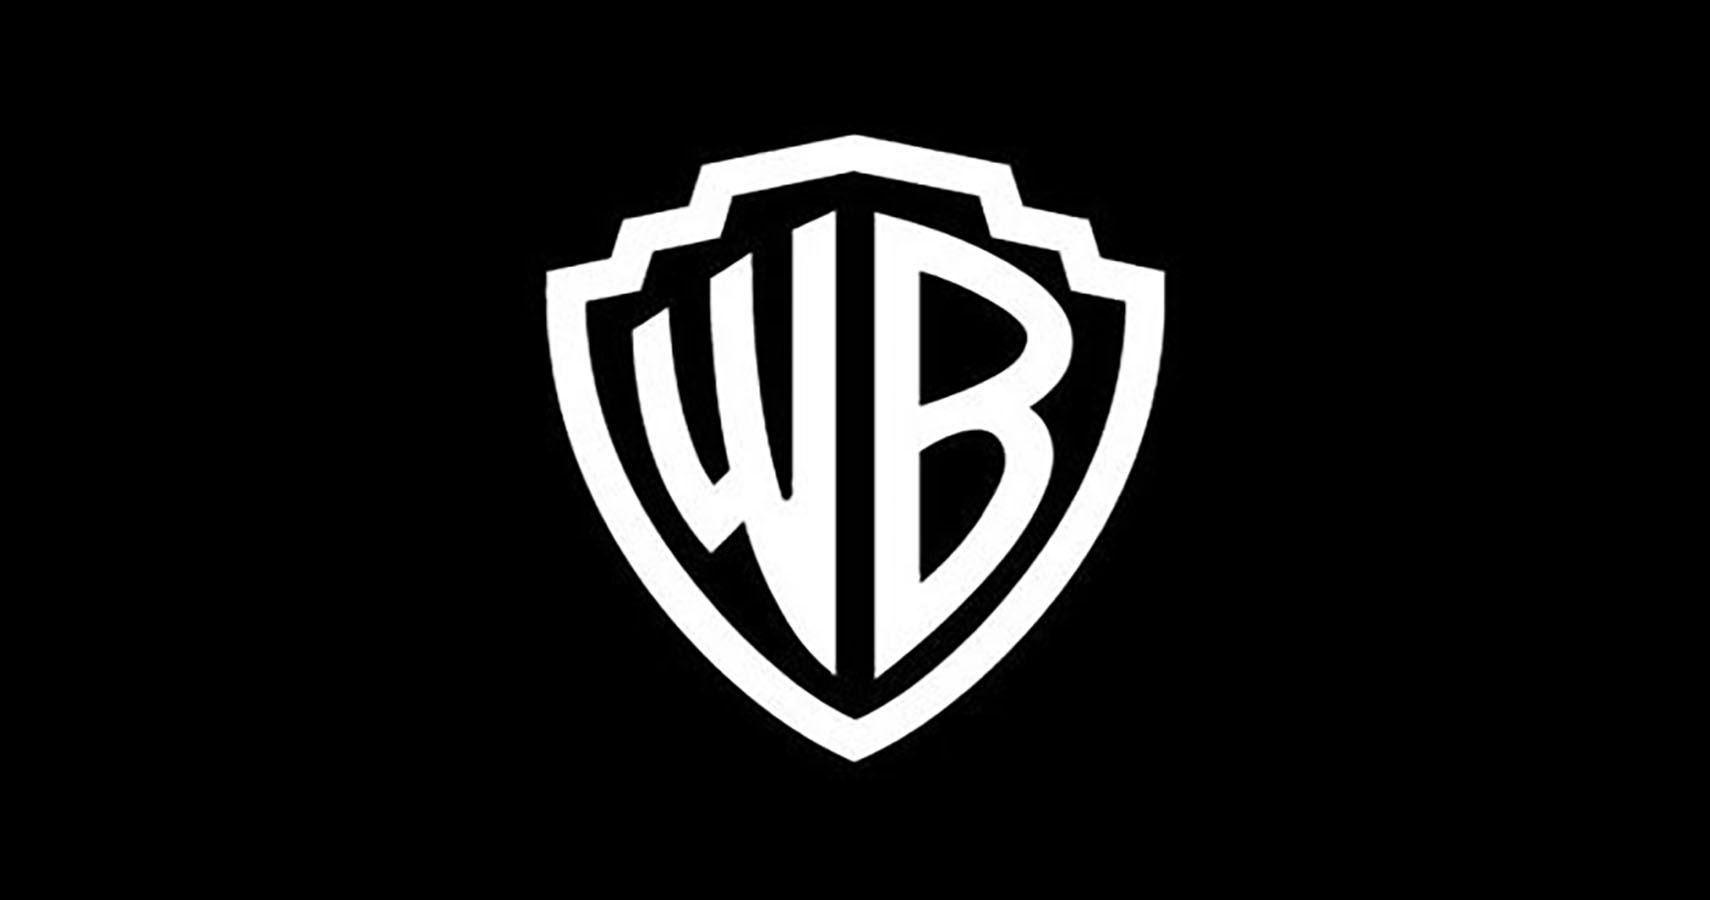 A white Warner Bros. logo on a black background.